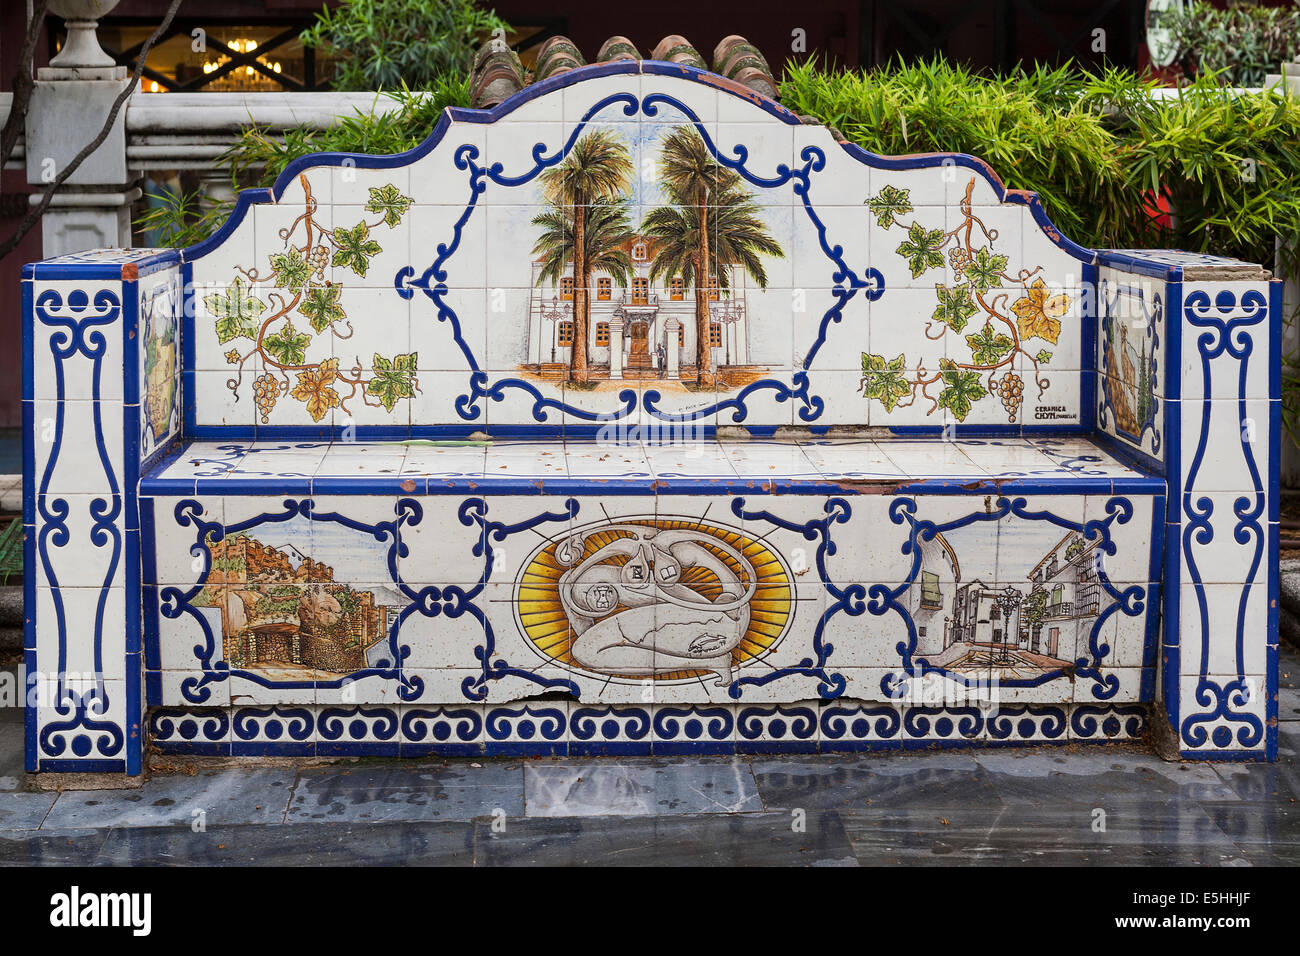 Spain Andalucia, Marbella, Ceramic seat in Paseo Alameda Stock Photo